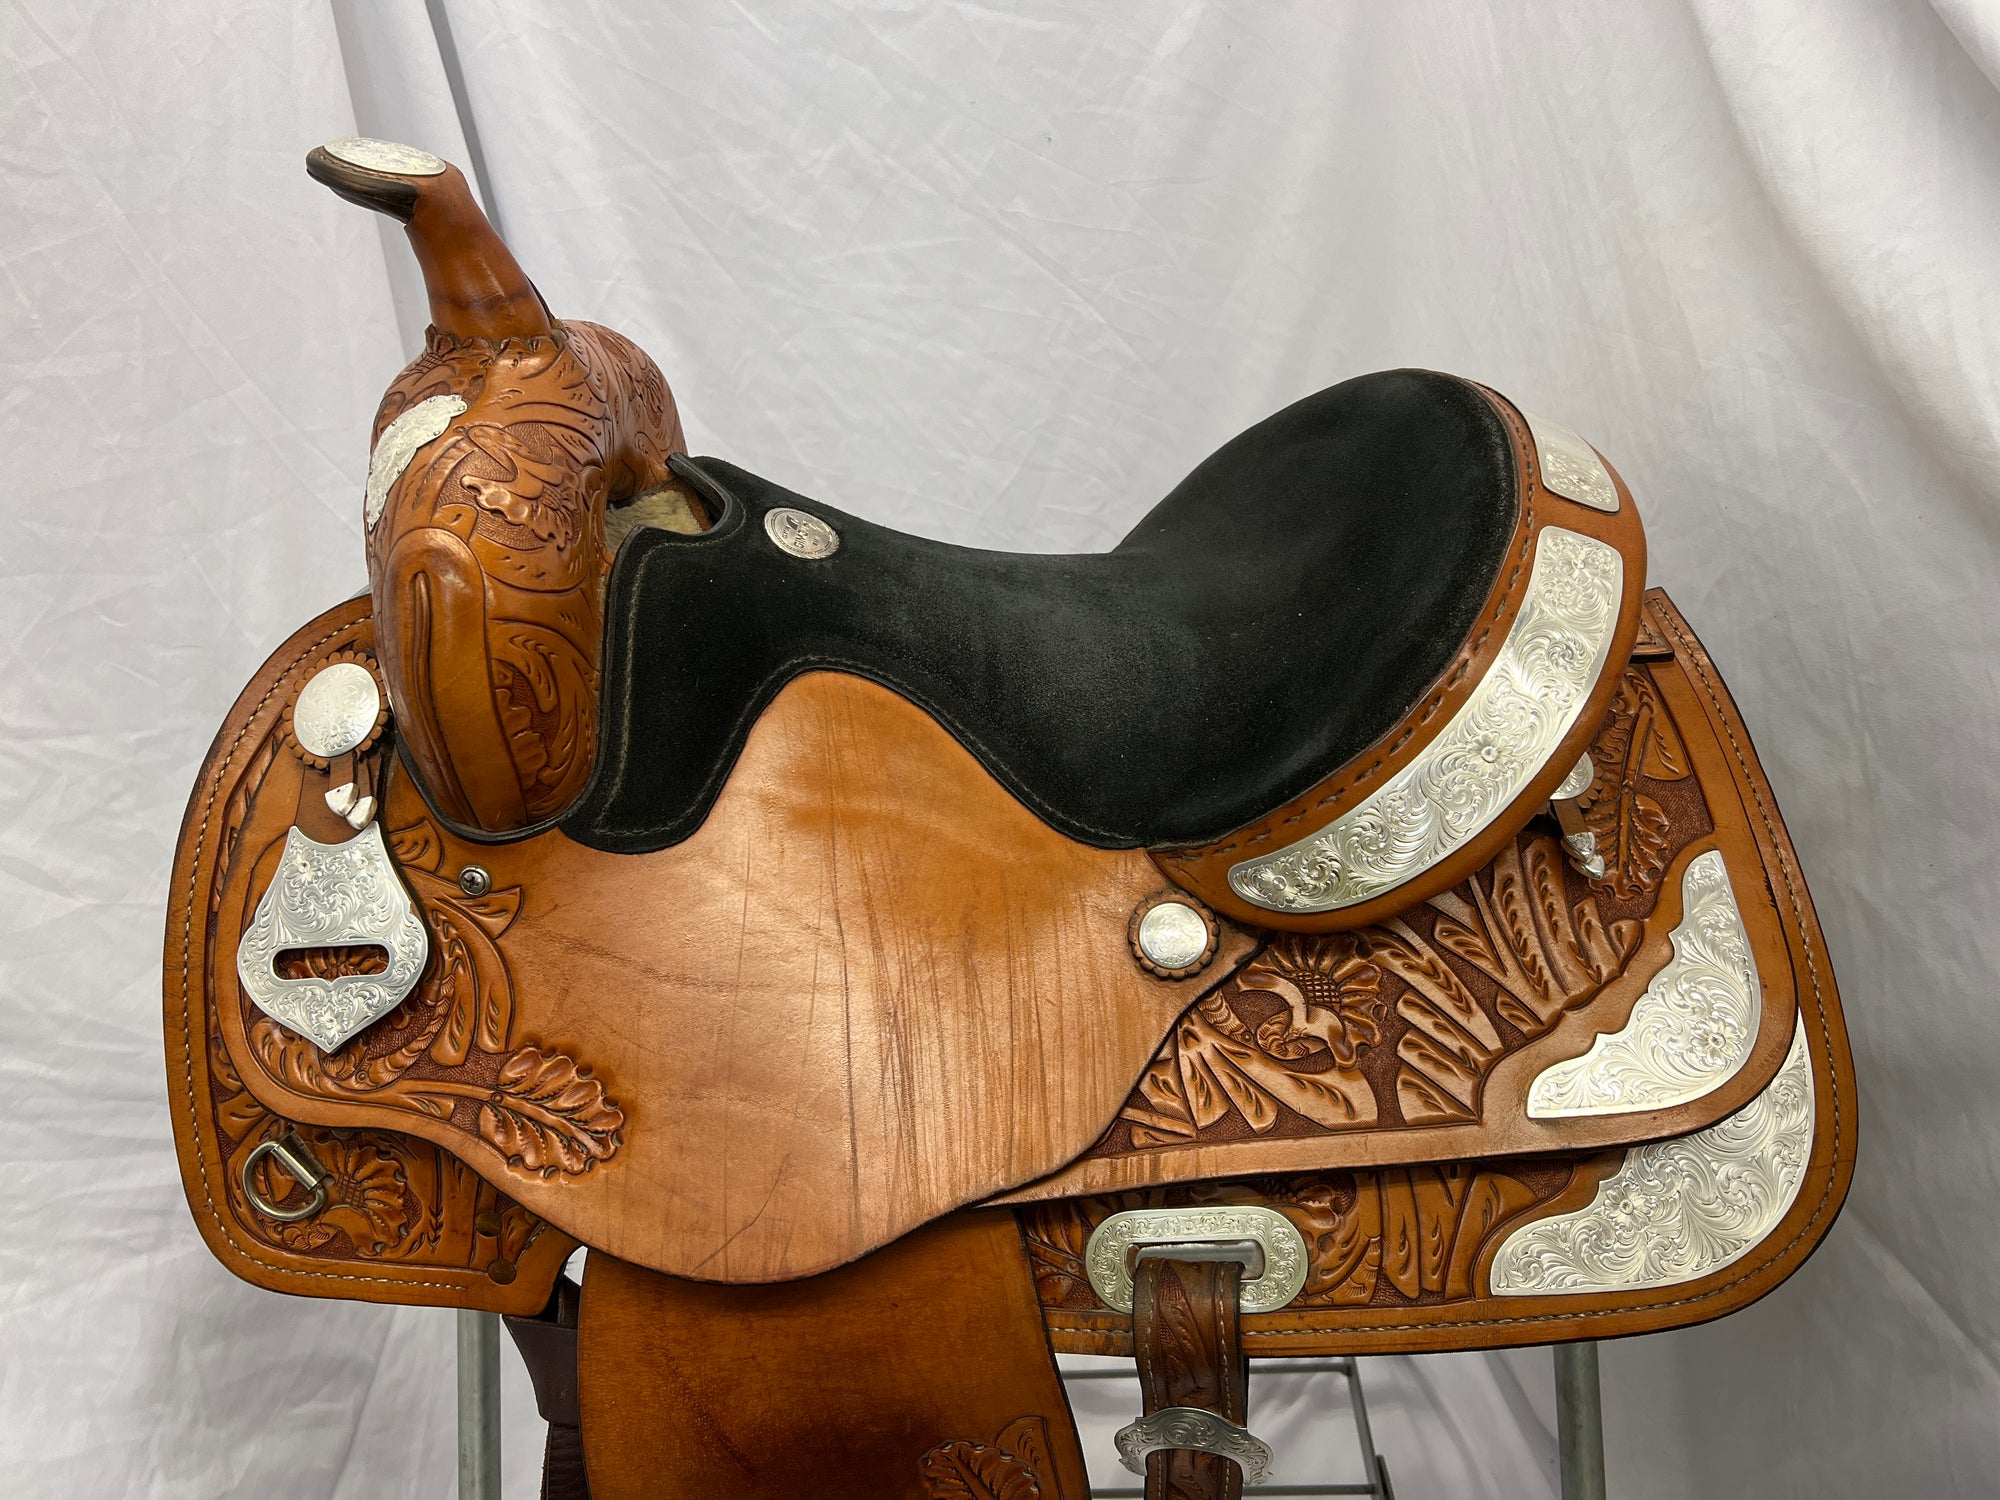 Used SIMCO 15” Western Show Saddle